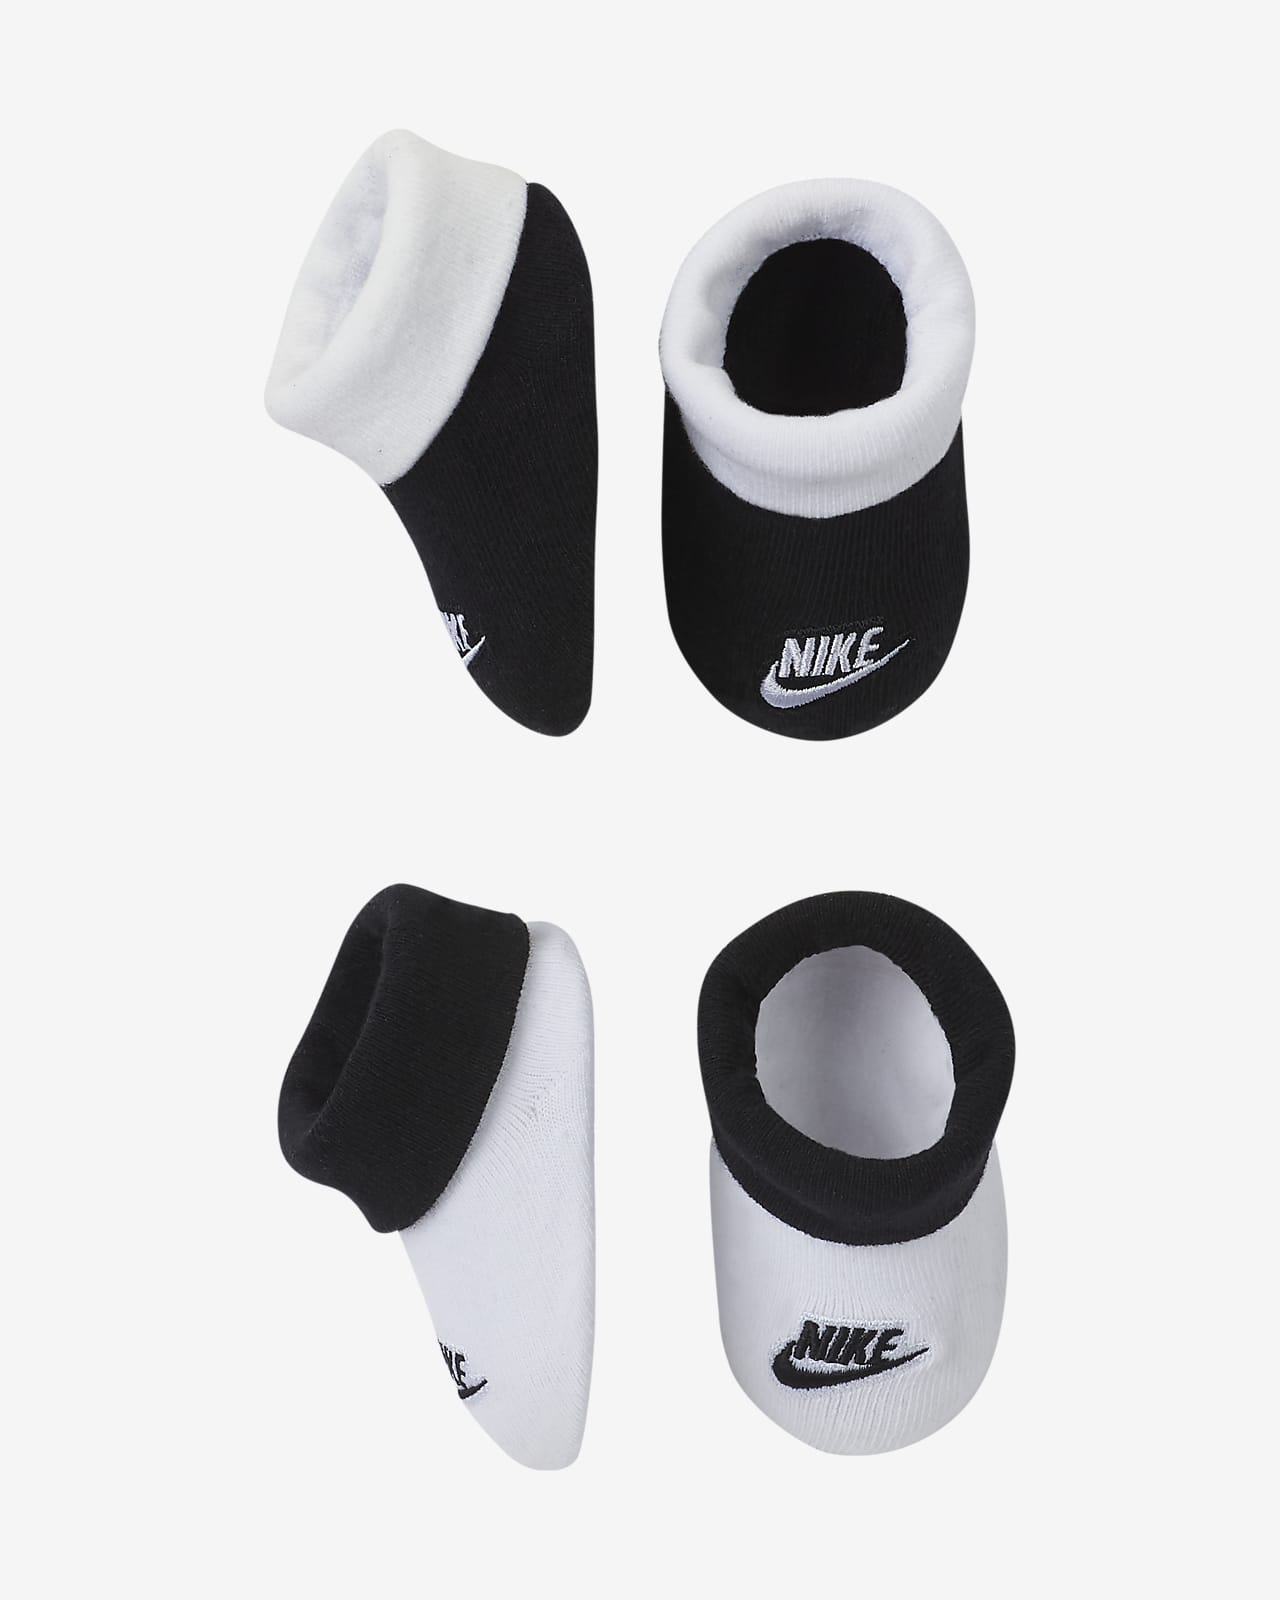 Nike Baby (0-6M) Booties (2 Pairs)